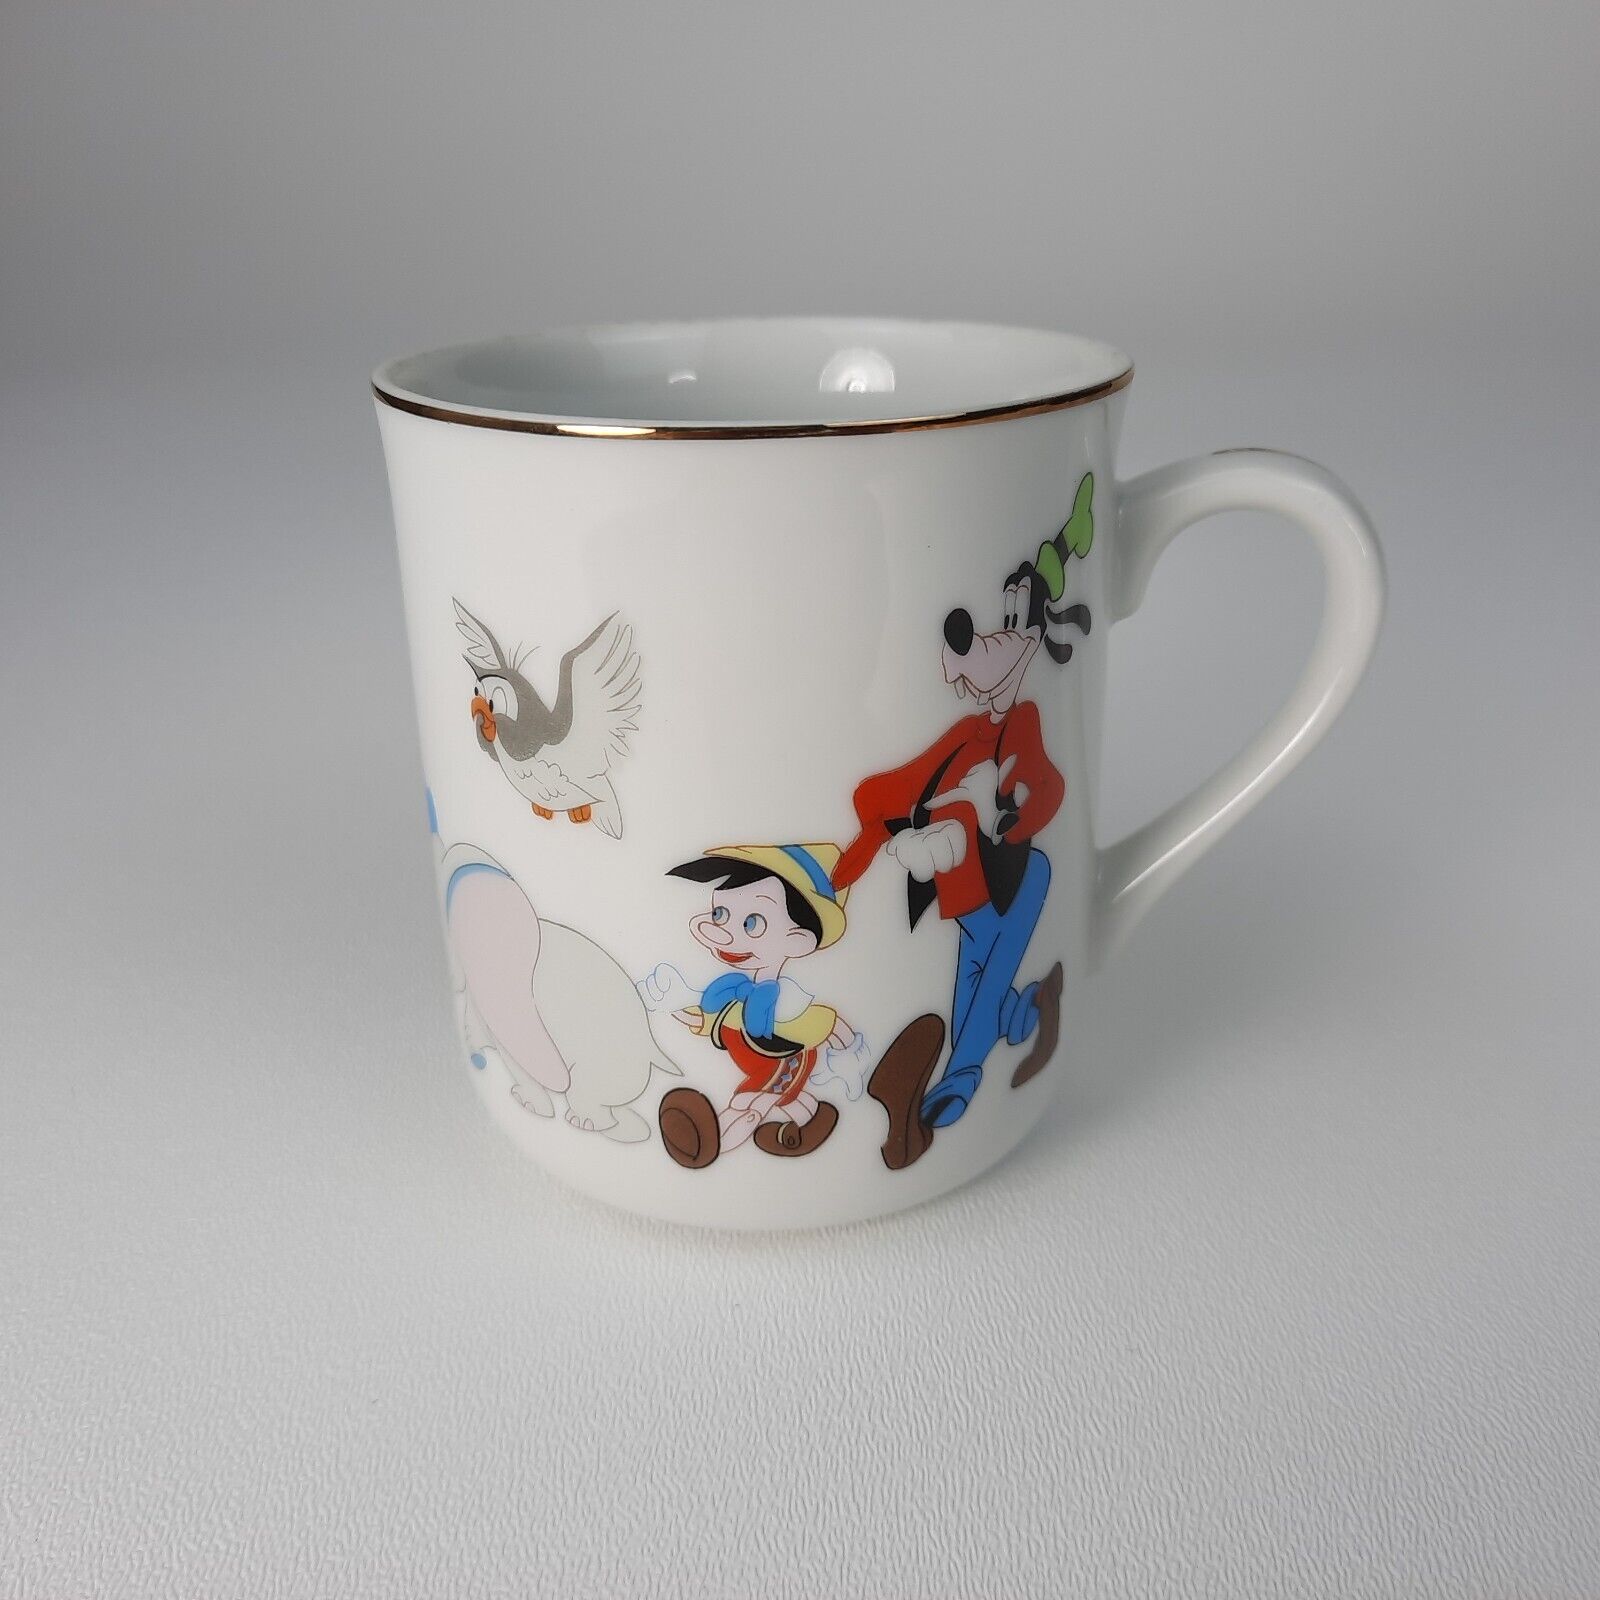 Mickey Mouse Goofy Donald Dumbo Duck Walt Disney Productions Mug Porcelain Japan